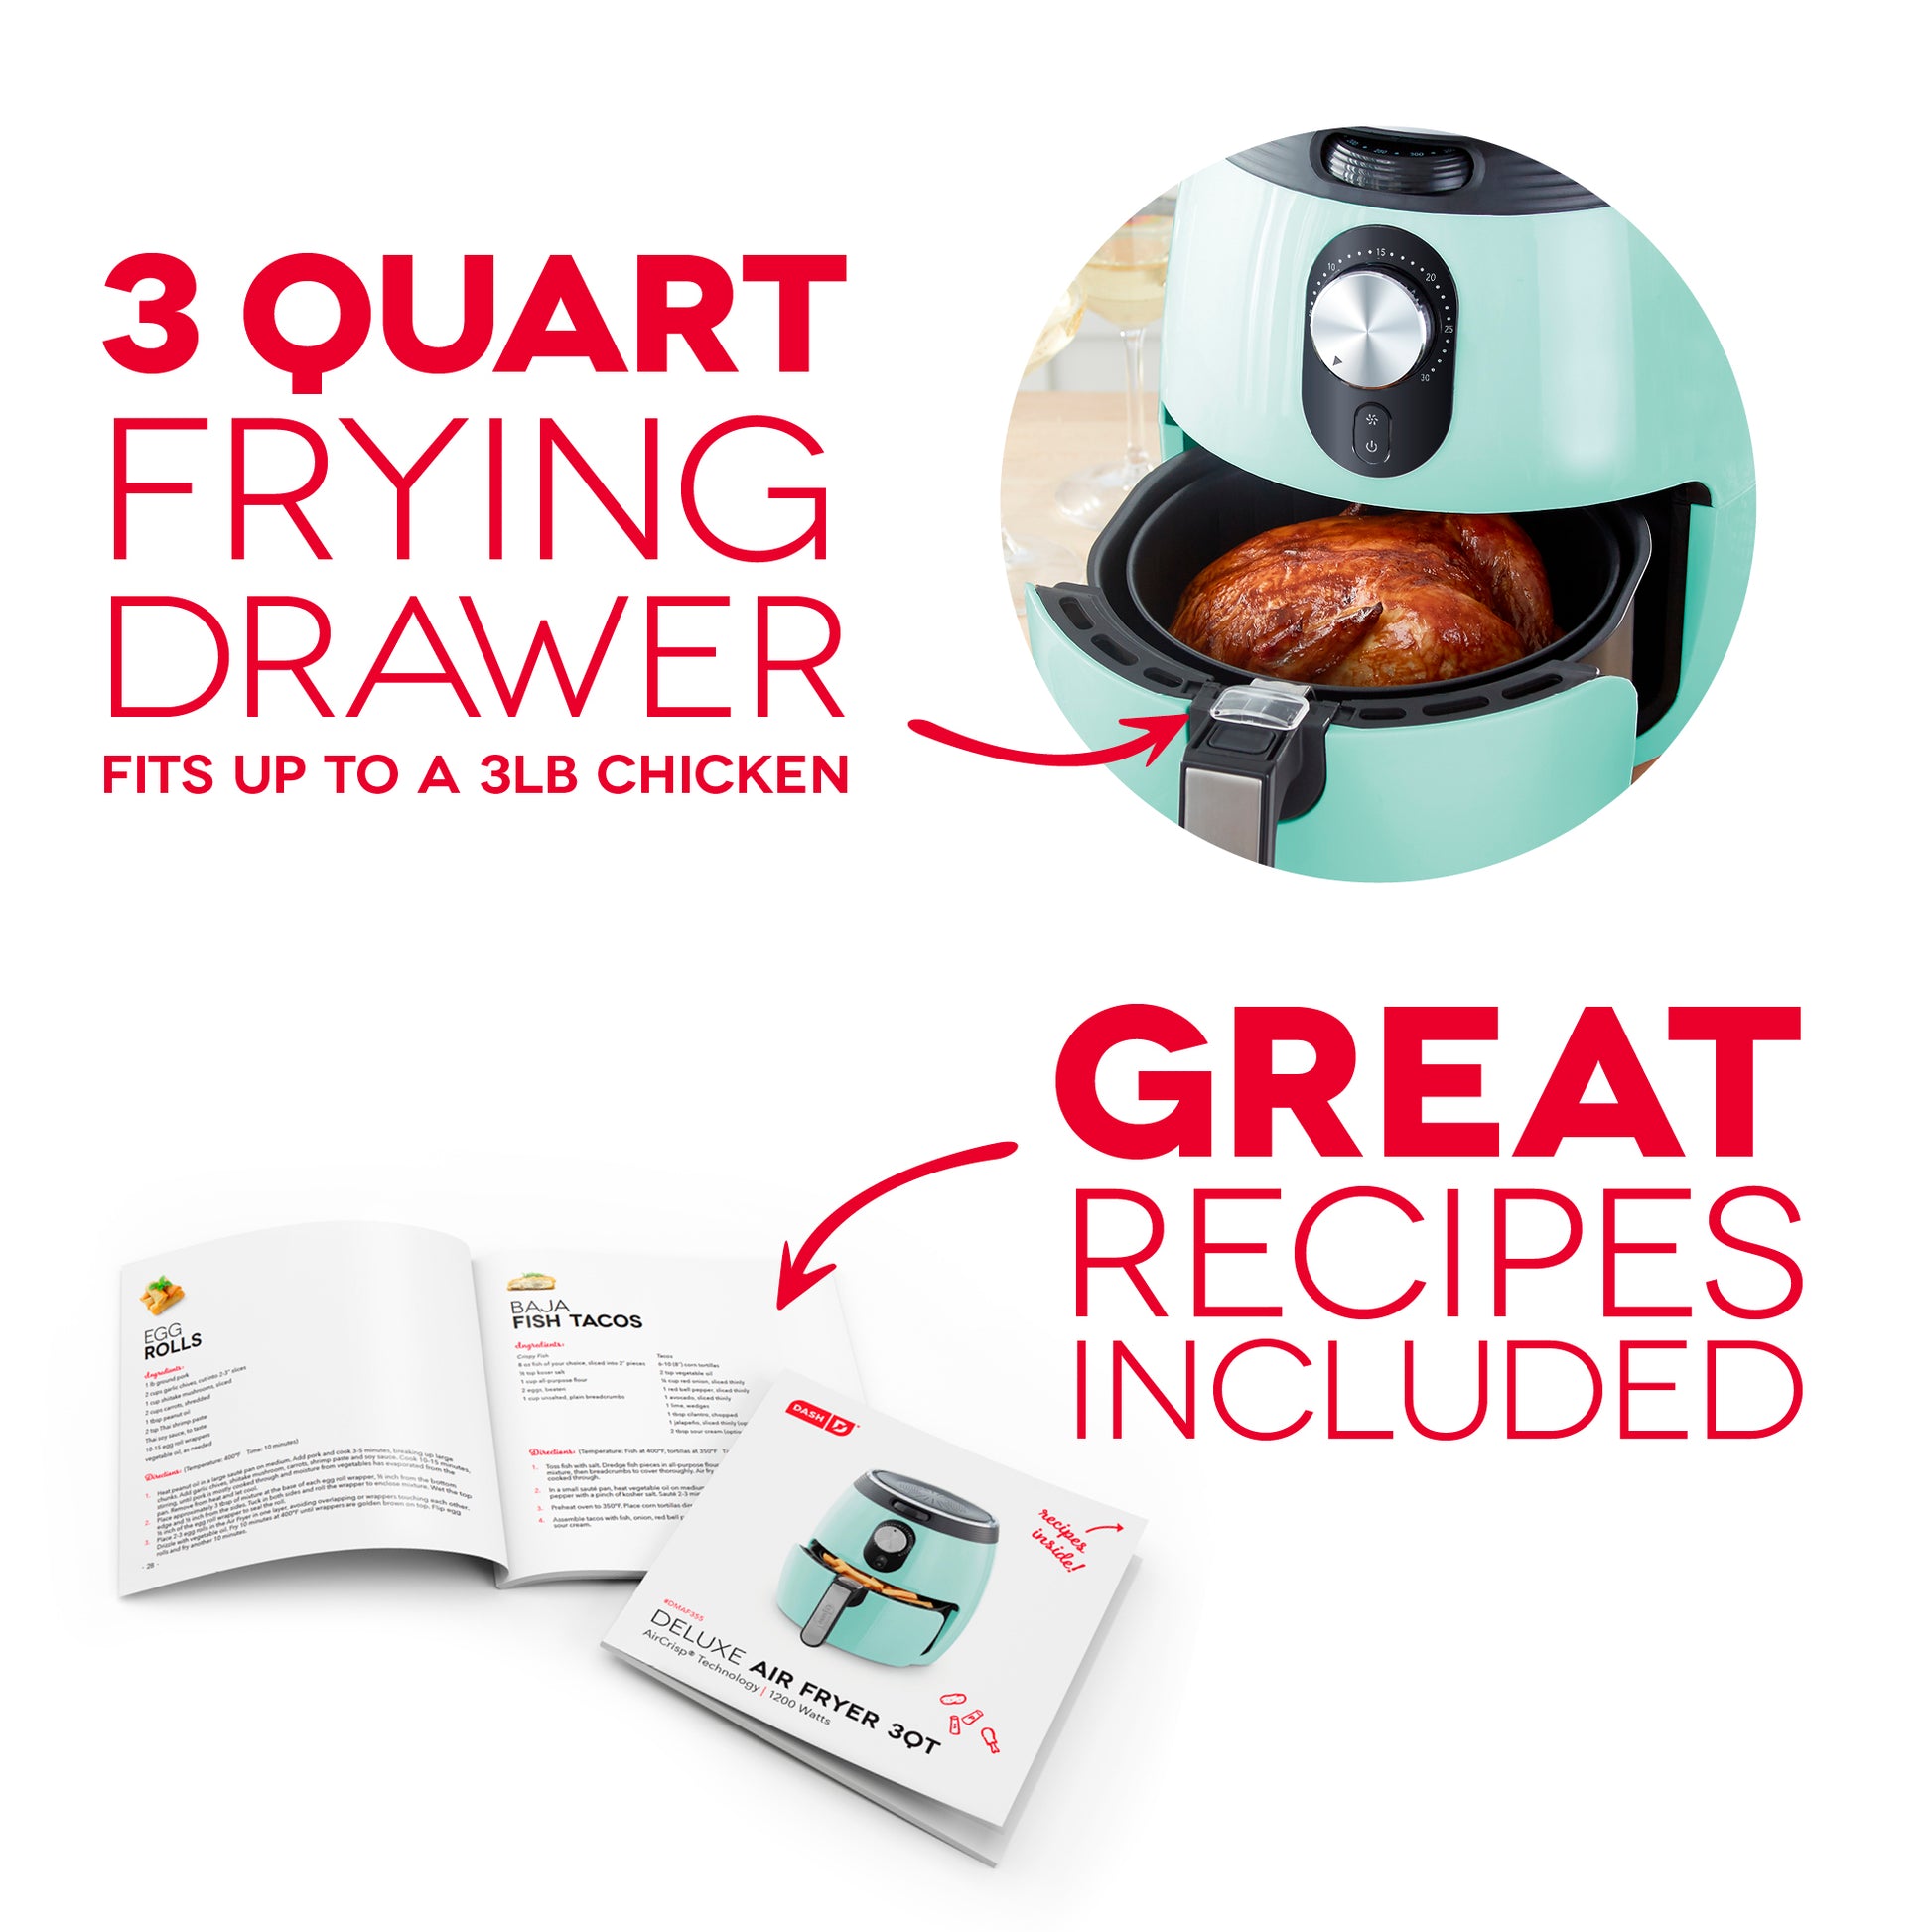 DASH Compact Air Fryer Oven Cooker with Temperature Control, Non-stick Fry  Basket, Recipe Guide + Auto Shut off Feature, 2 Quart - Aqua